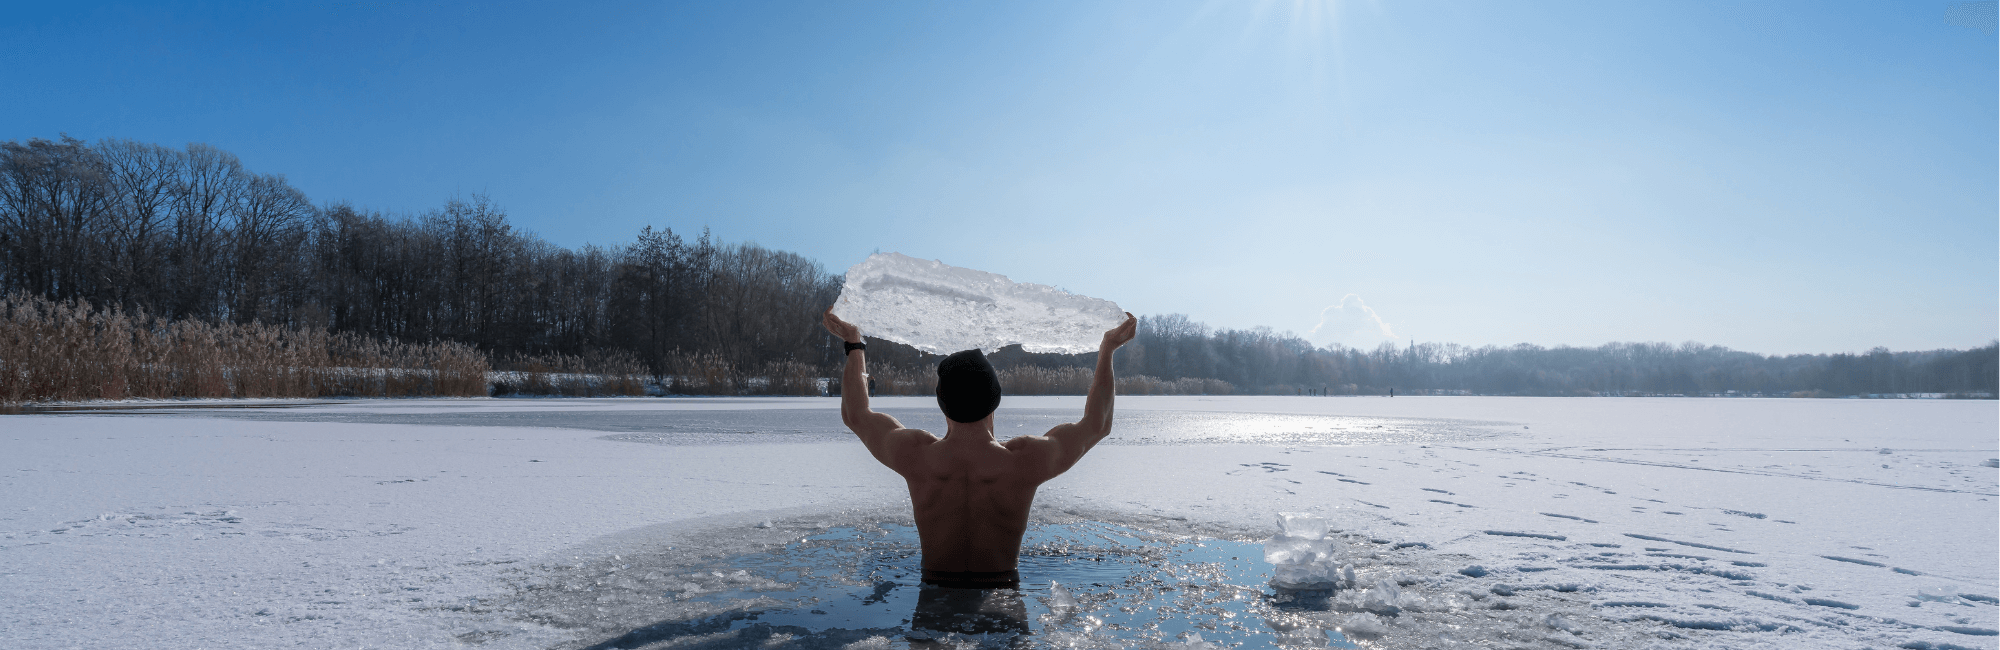 man in ice